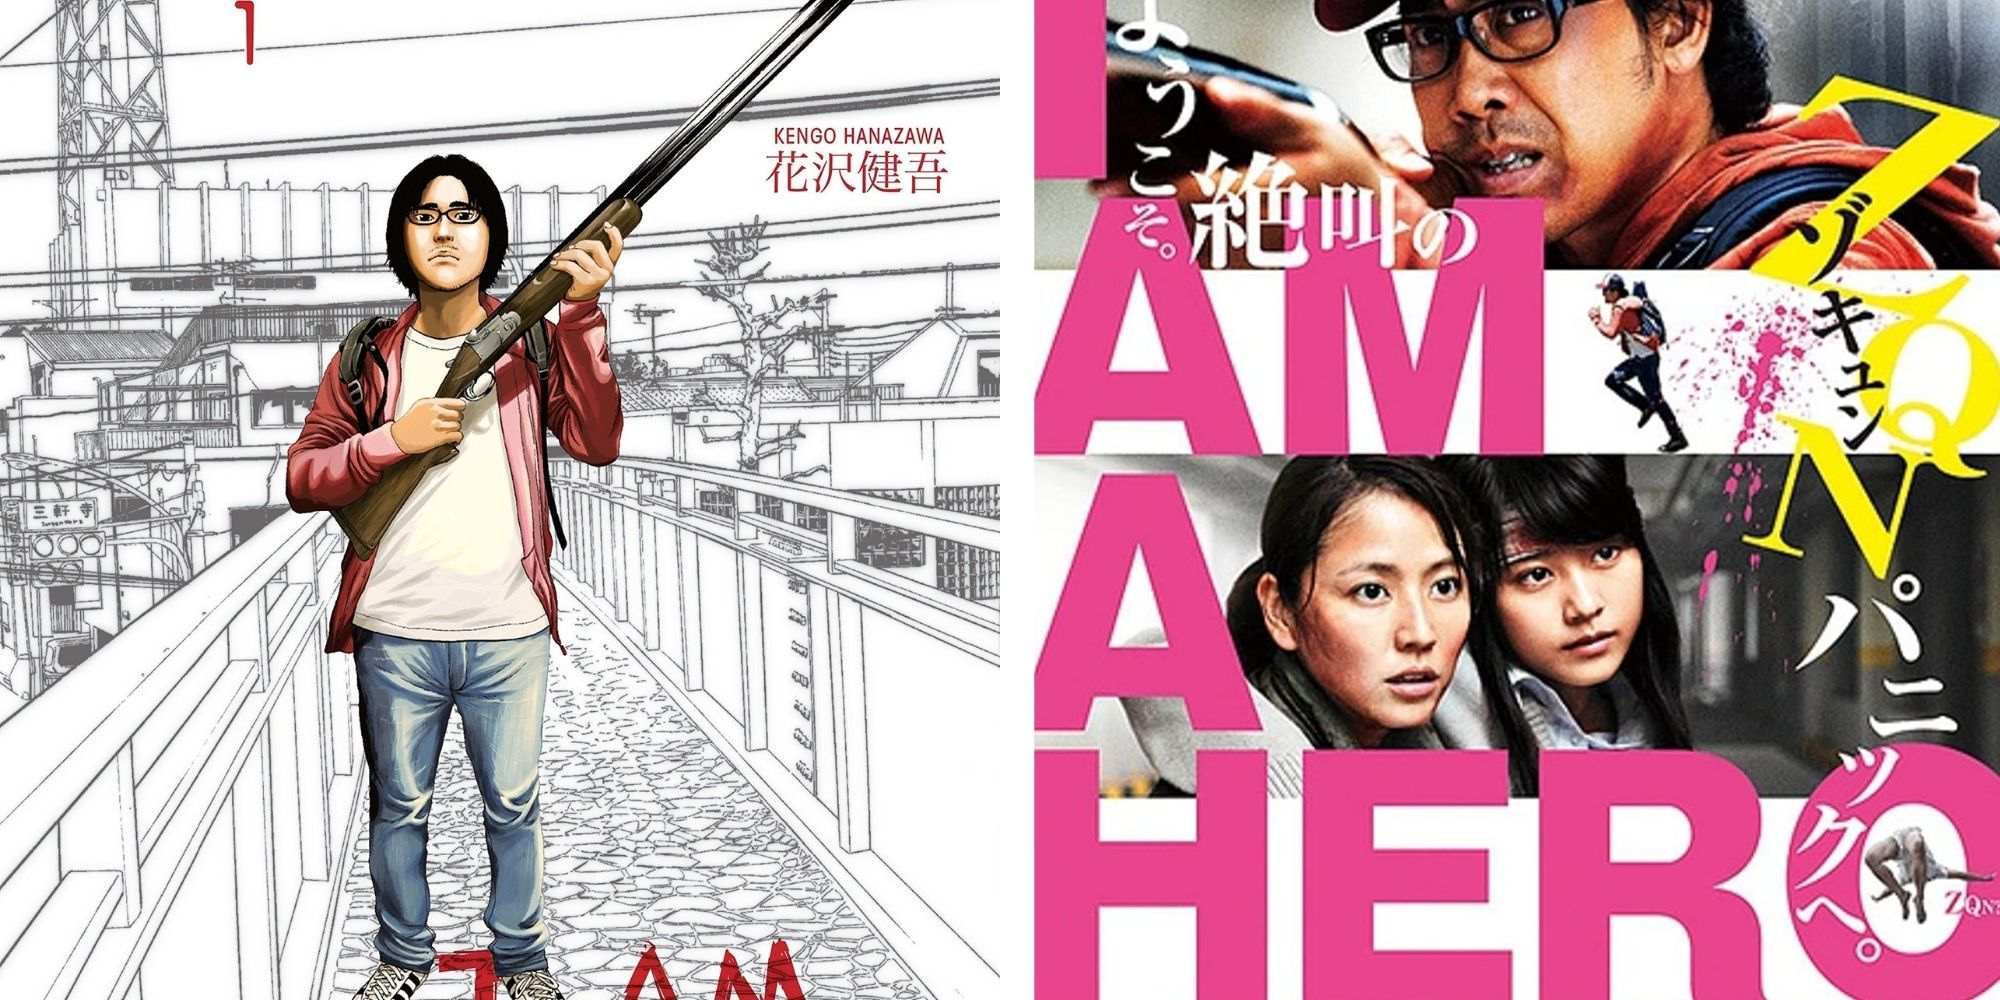 I Am A Hero manga and live-action